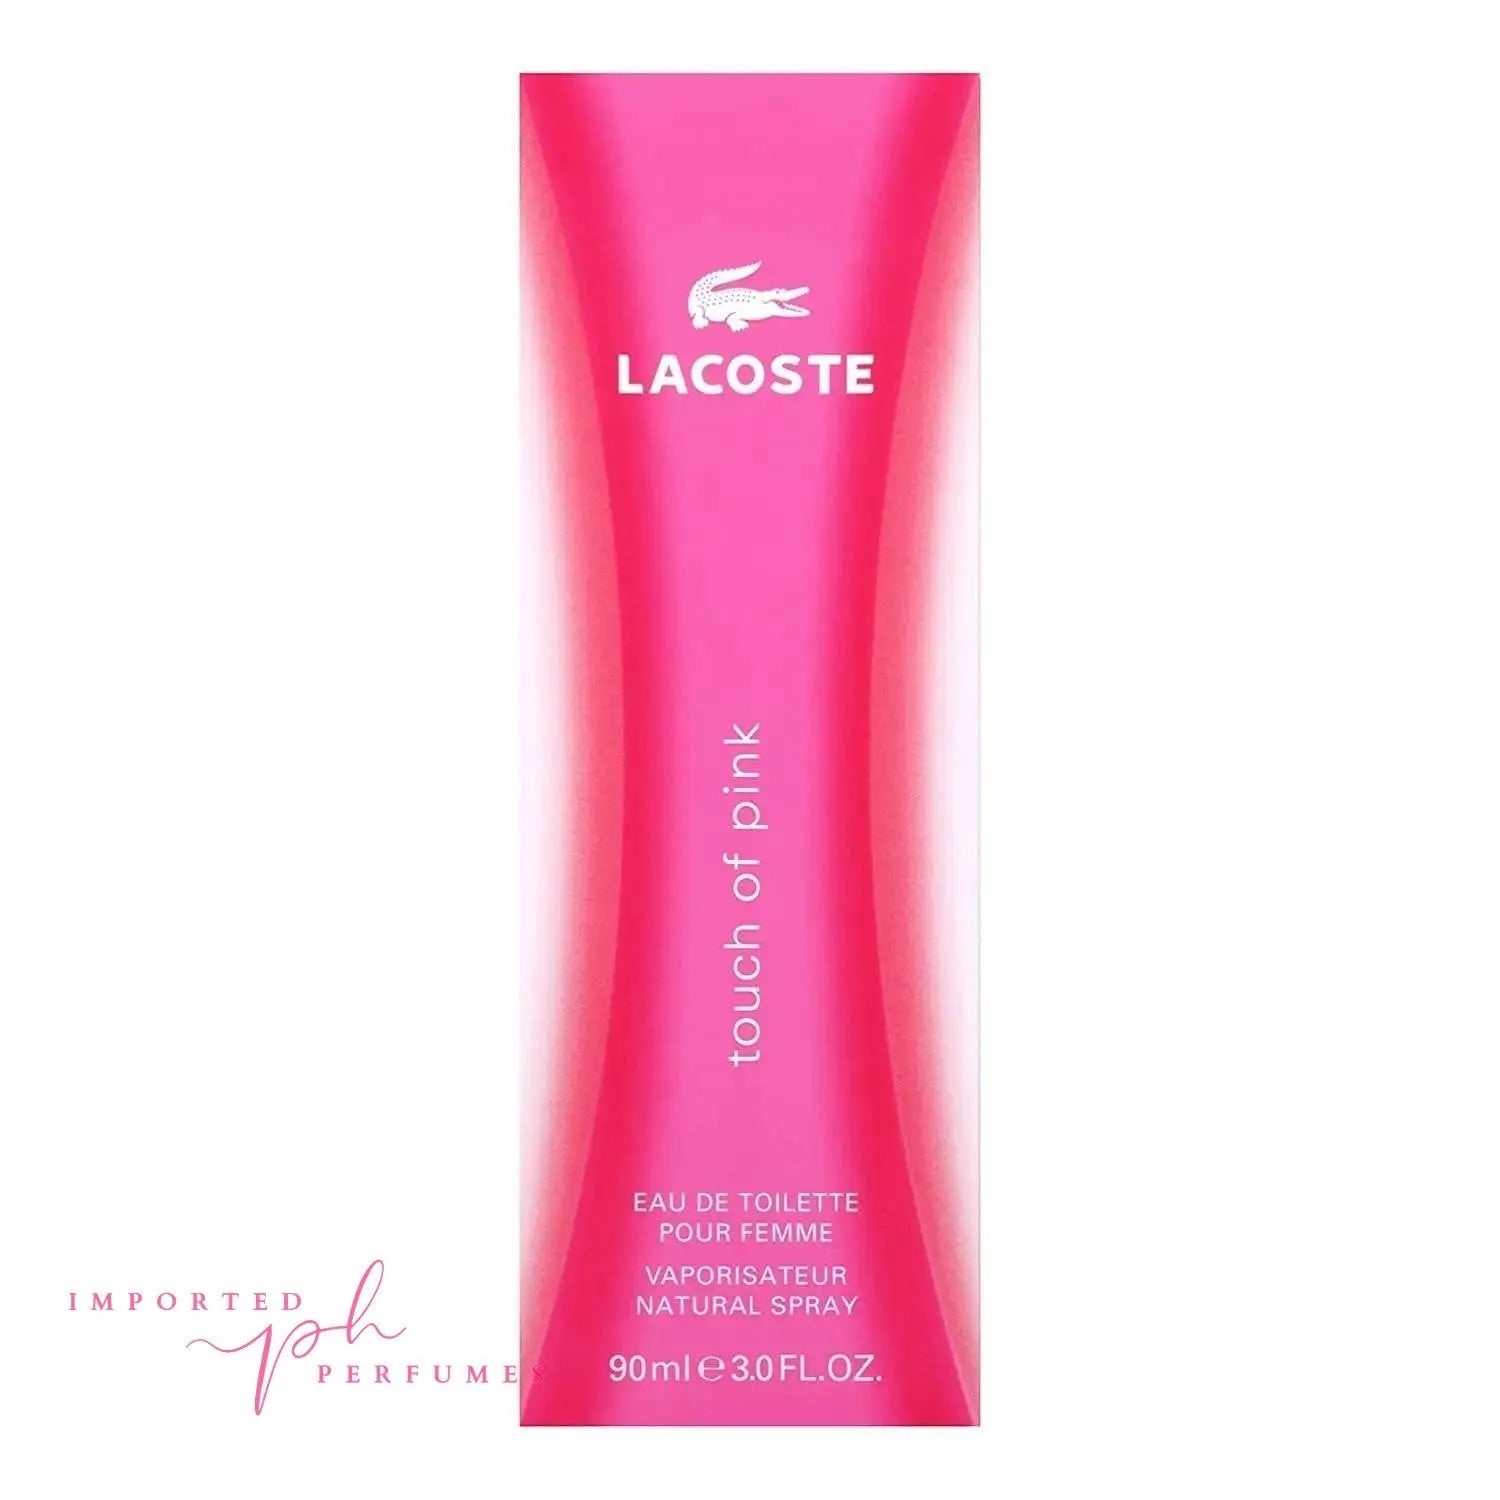 Lacoste Touch of Pink Eau de Toilette For Women 90ml Imported Perfumes Co